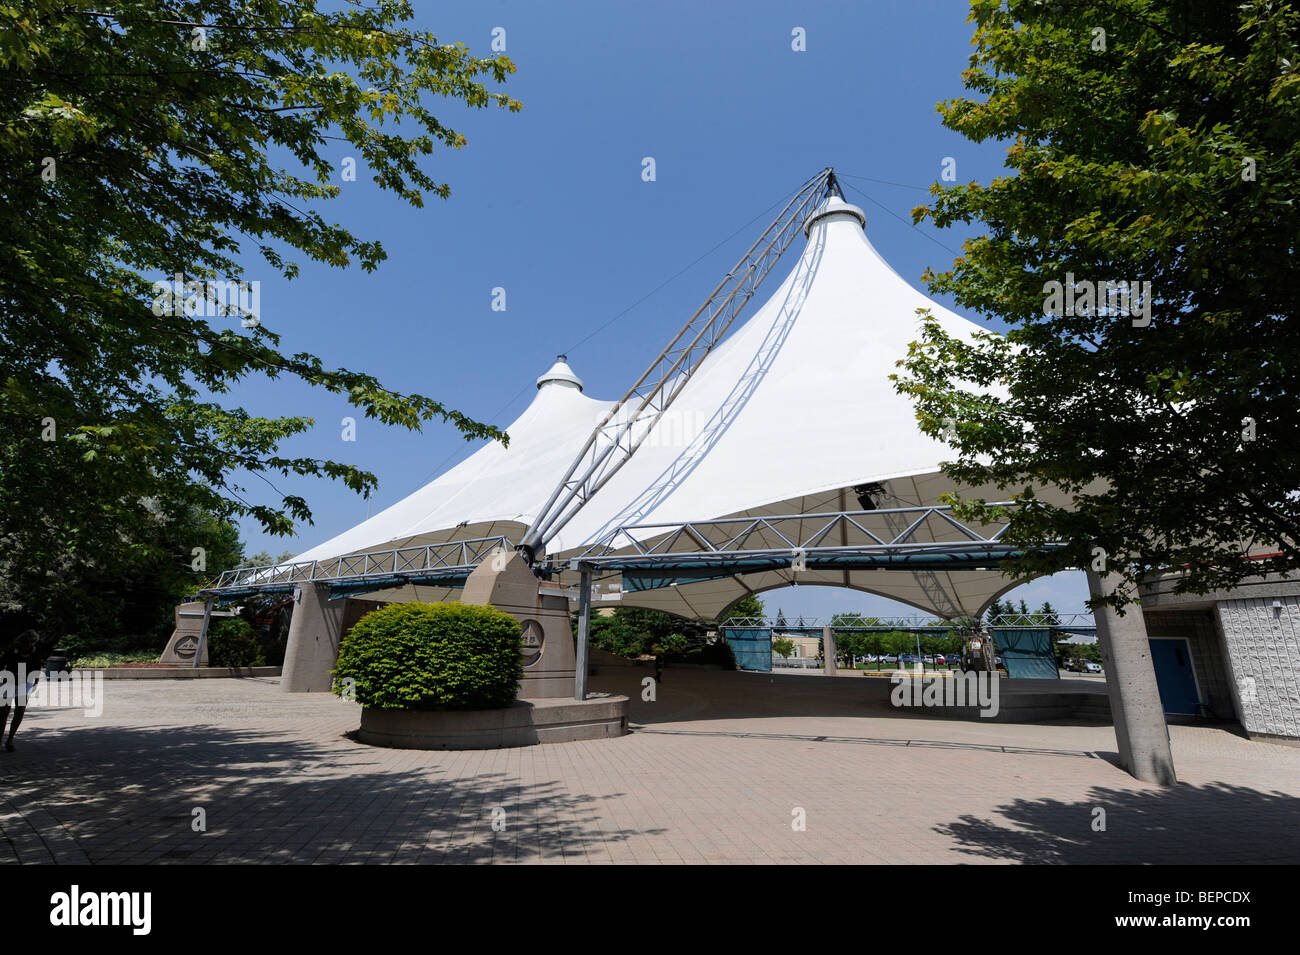 Zelt-Pavillon in Roberta Bondar Park entlang St. Marys River Sault Ste Marie Ontario Kanada Stockfoto